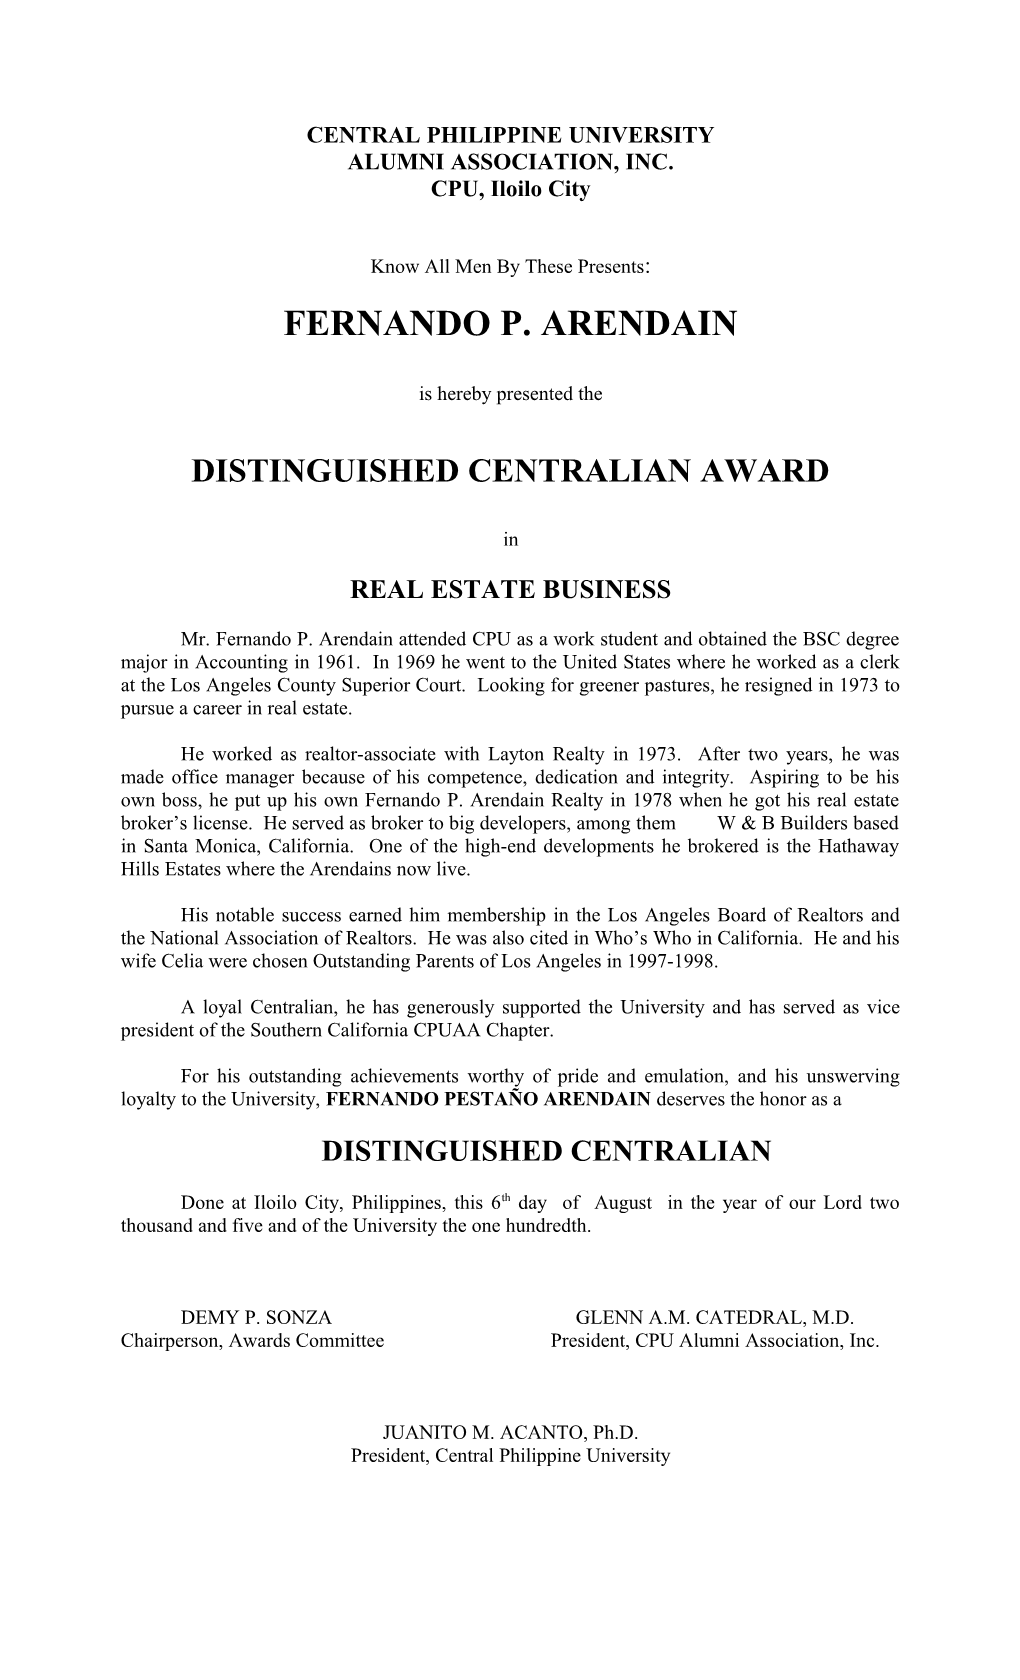 Distinguished Centralian Citations 2005